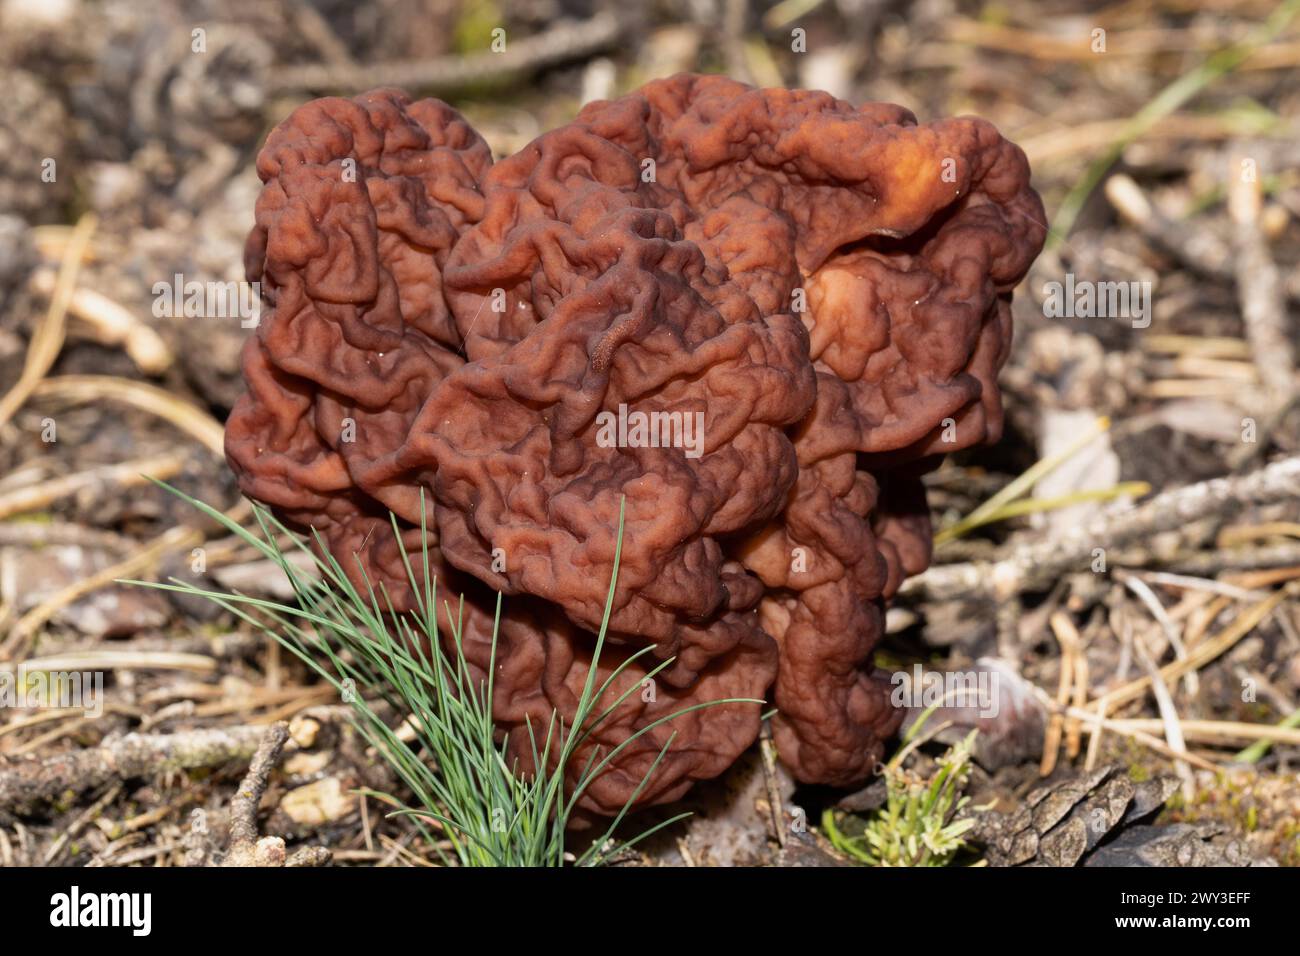 Spring Lorikeet maroon brain-like fruiting body in needle litter Stock Photo